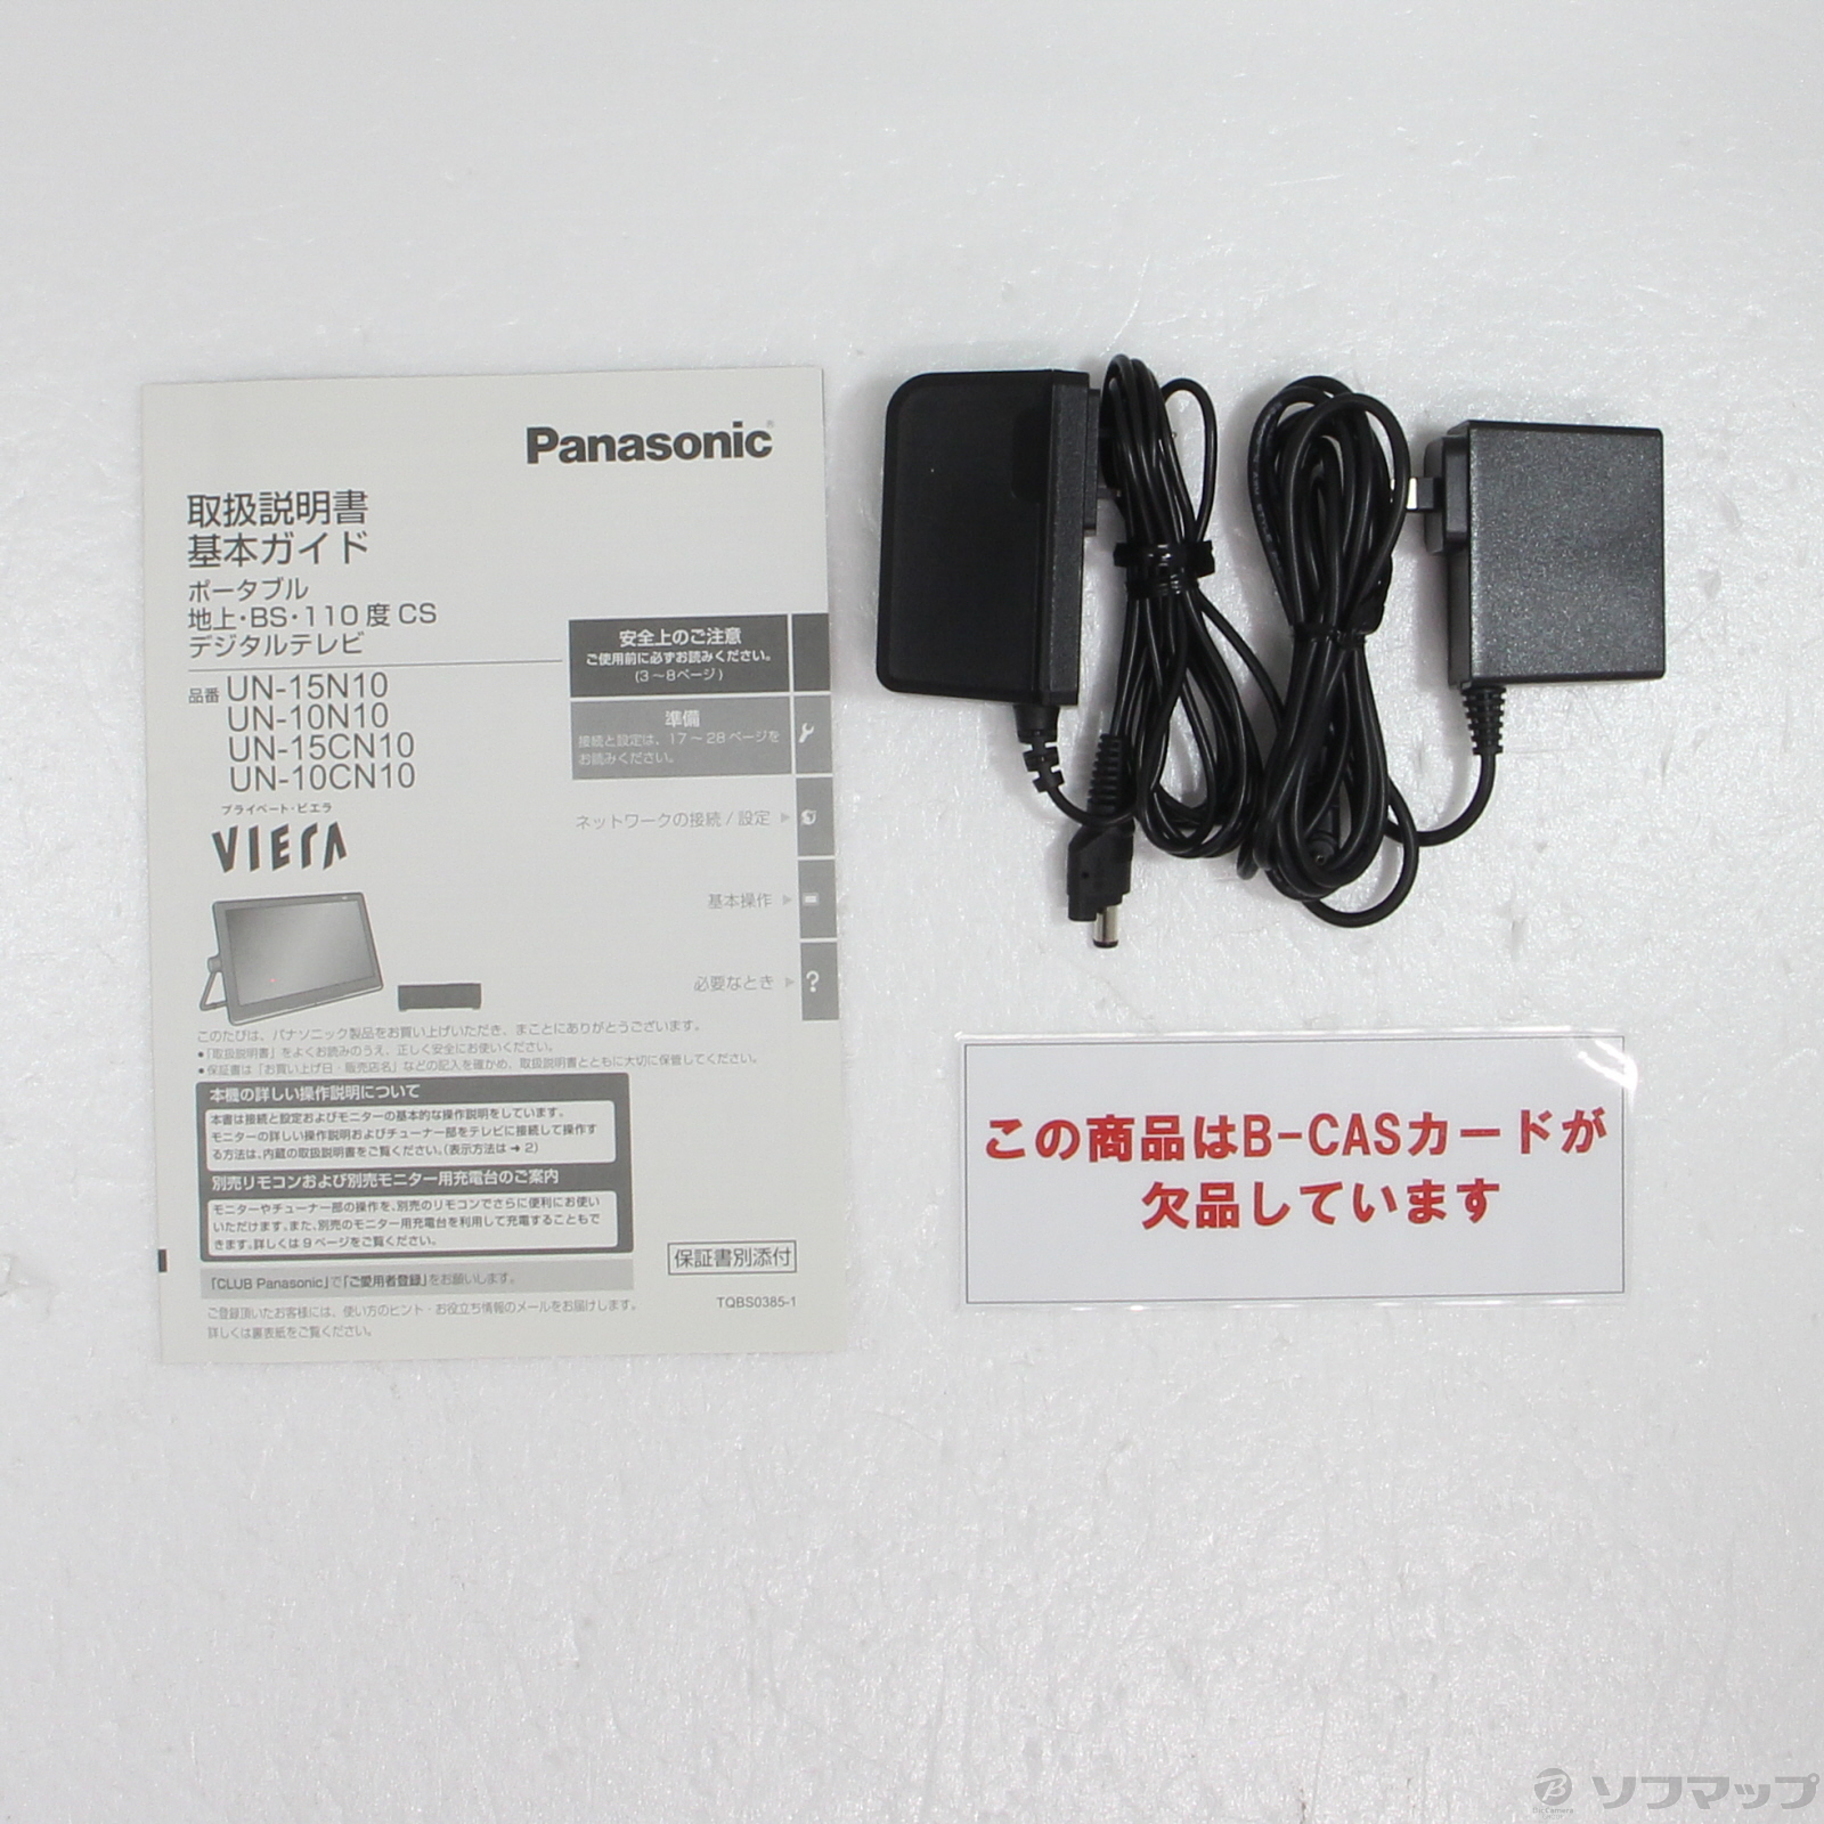 Panasonic UN-15CN10-K ポータブルテレビ プライベート